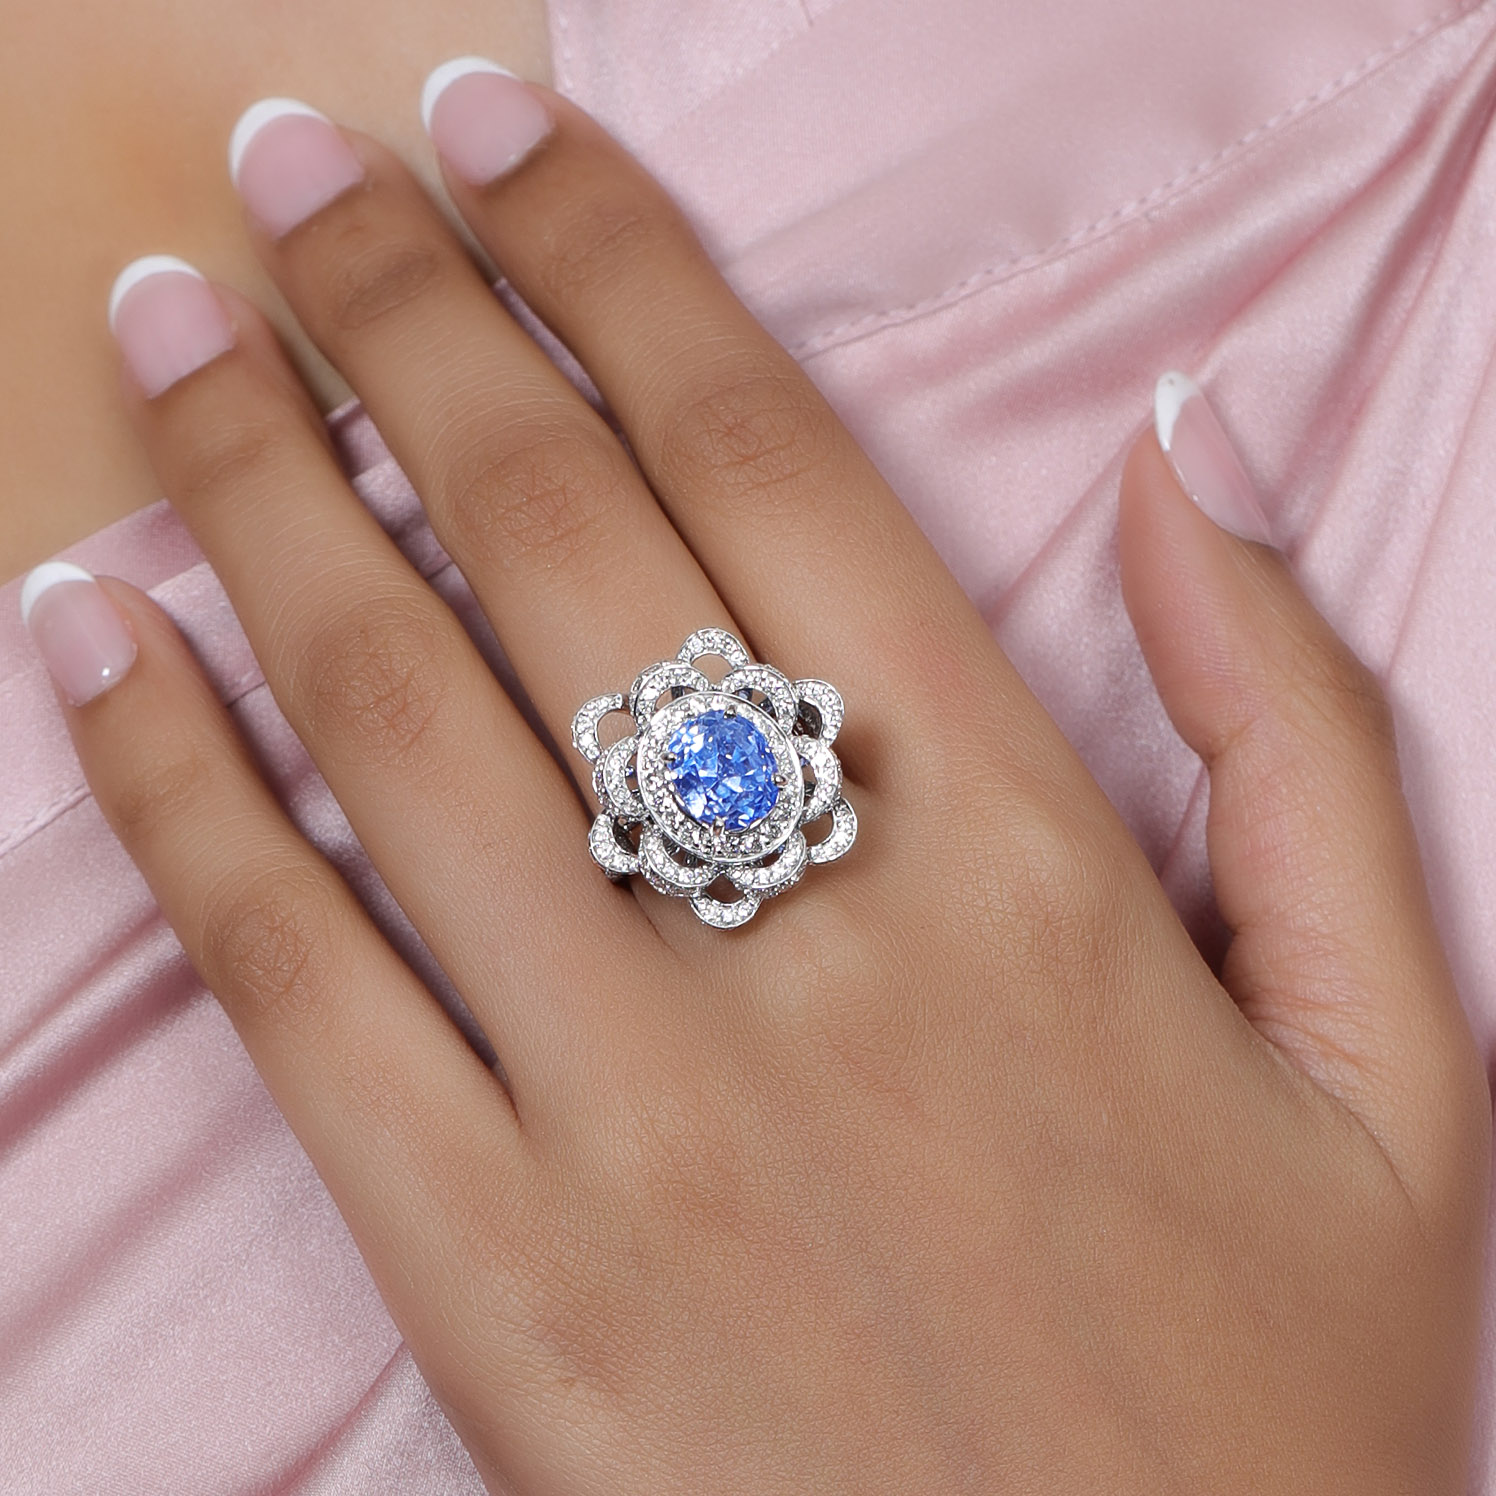 Buy Now | Diana Blue Sapphire Ring | AMALFA – Amalfa